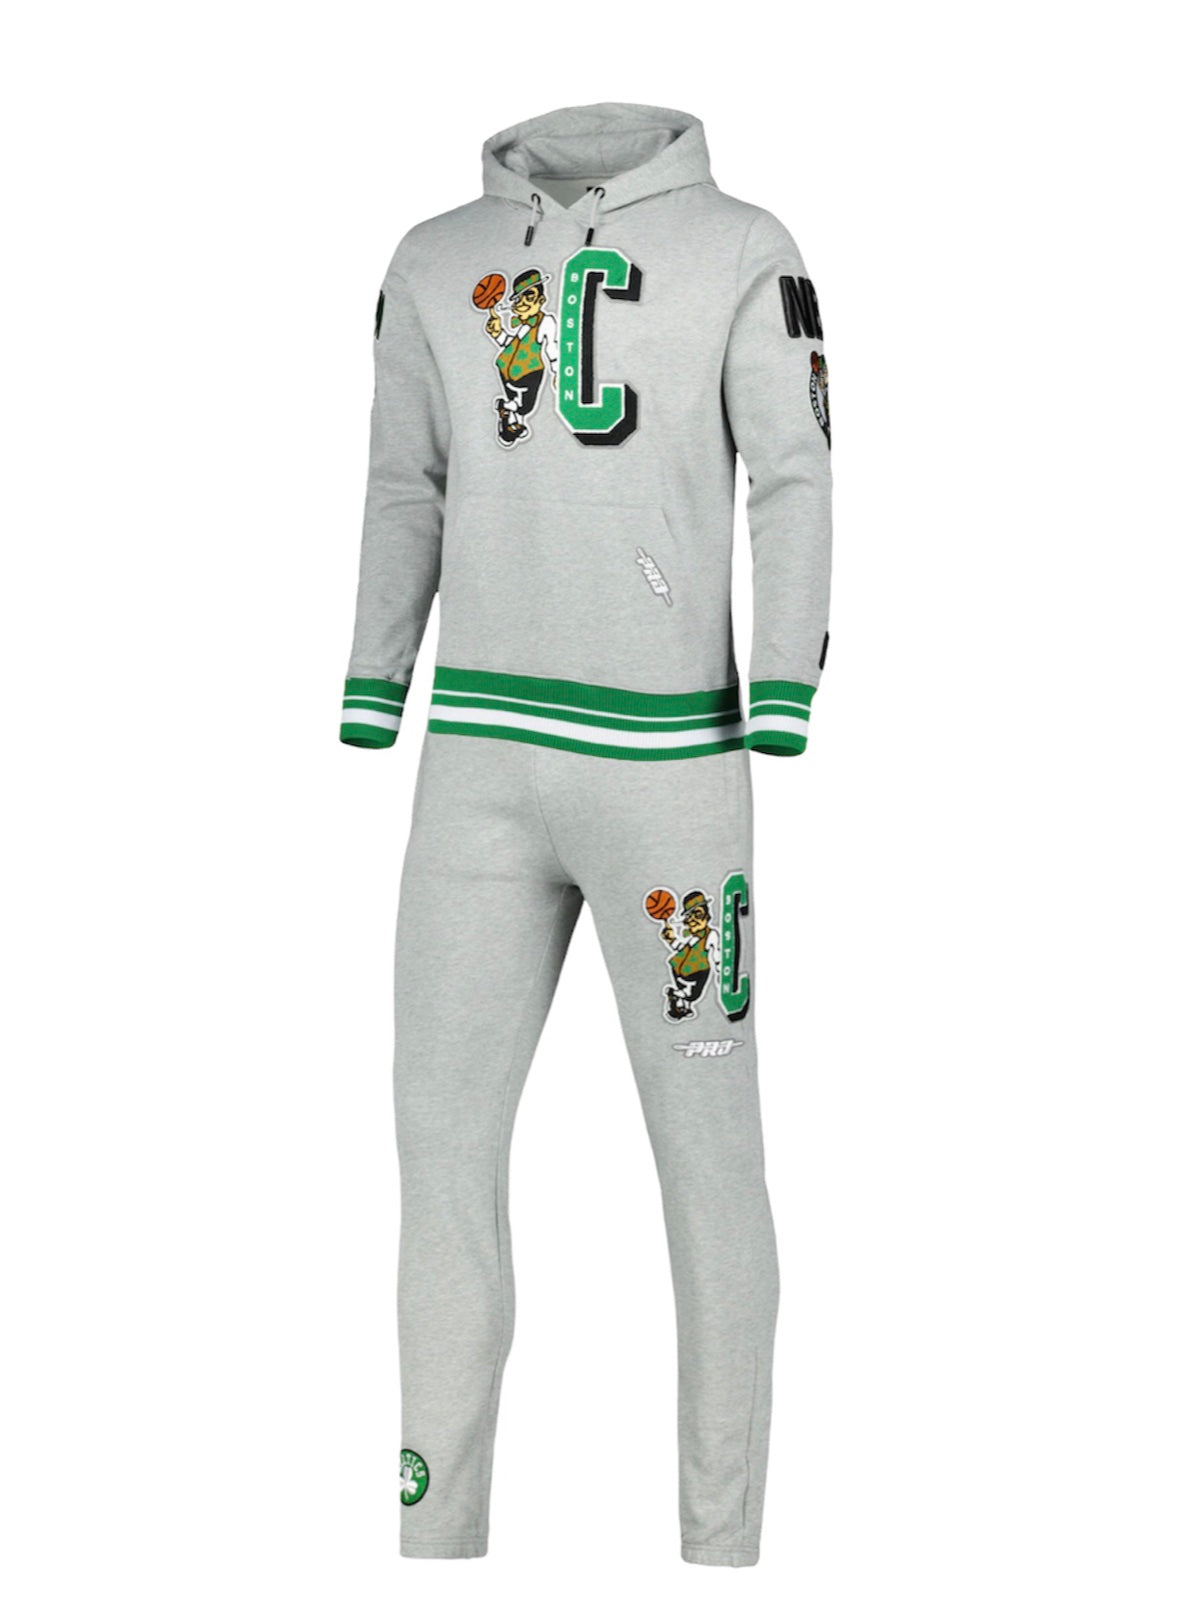 Boston Celtics Reveal Grey, Sleeved Parquet Pride Uniforms –  SportsLogos.Net News